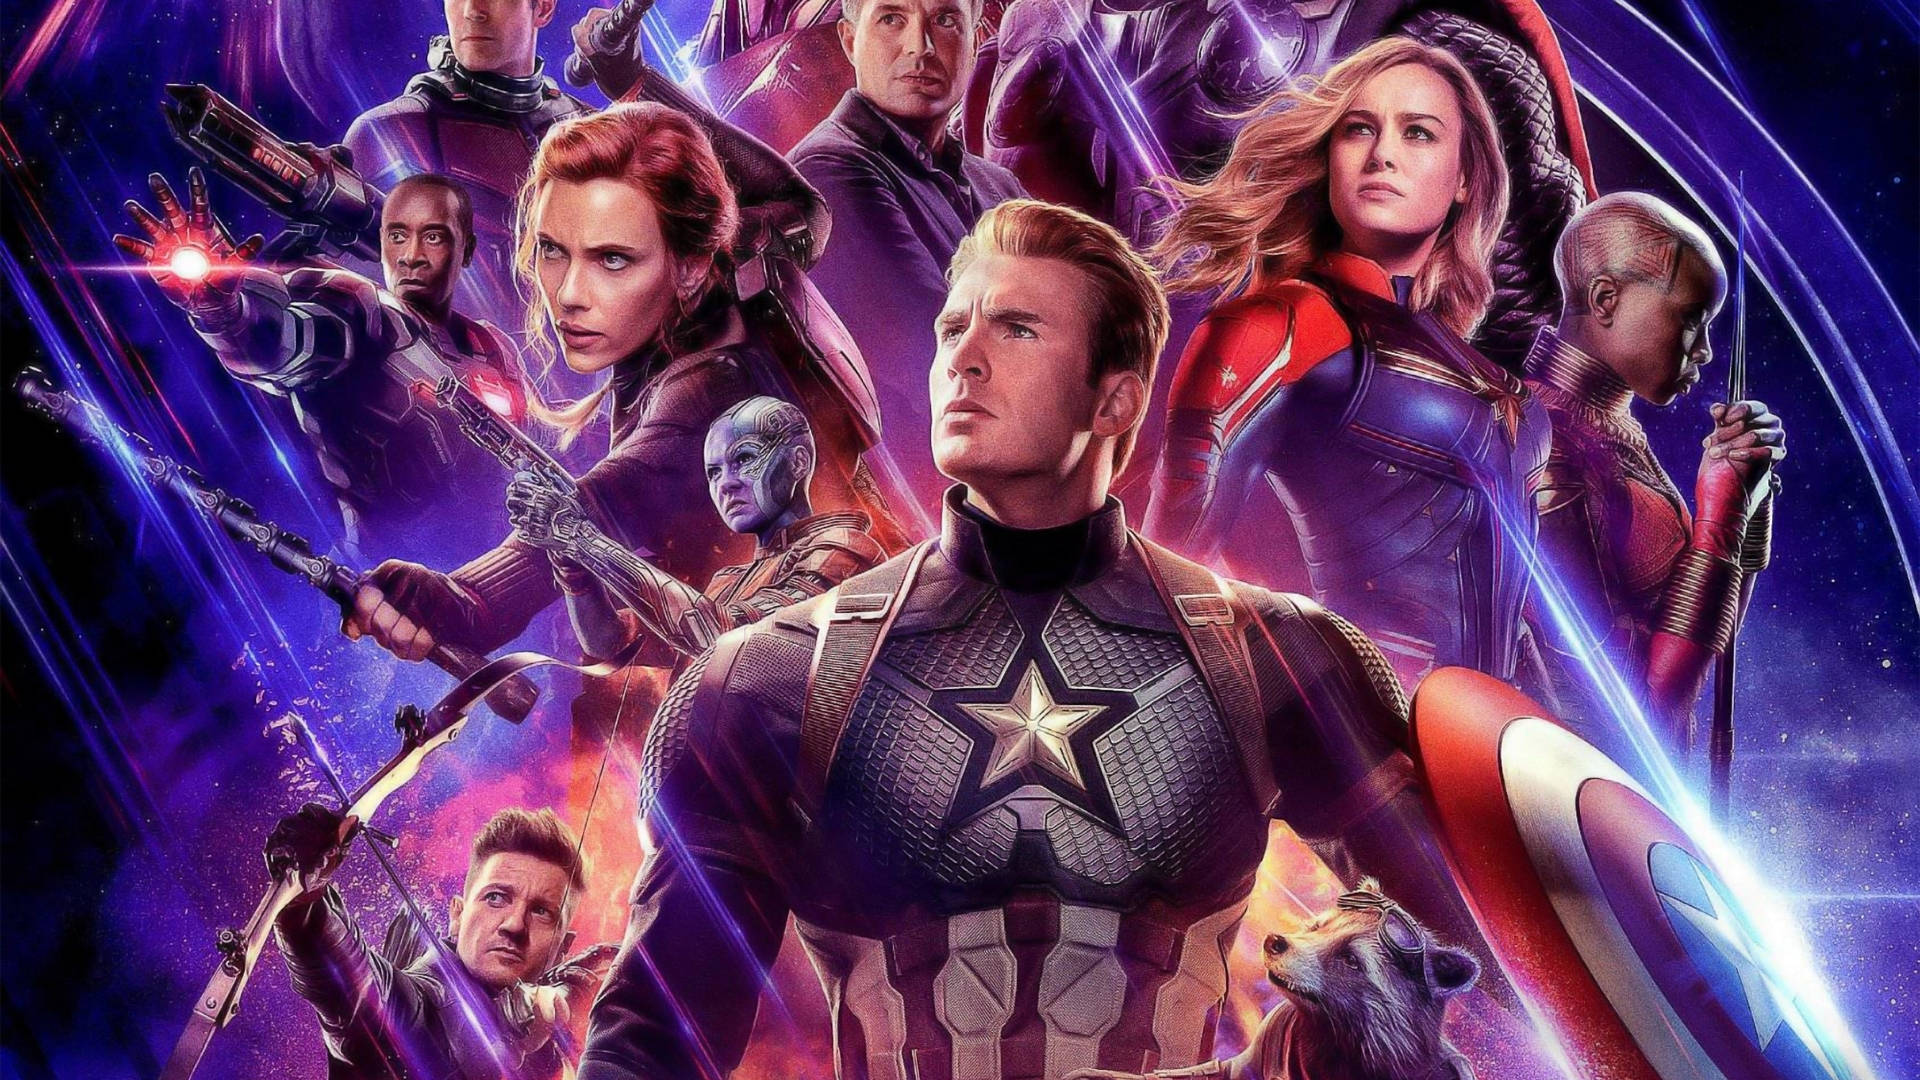 Heroes Assemble for the Epic Avengers Battle Wallpaper